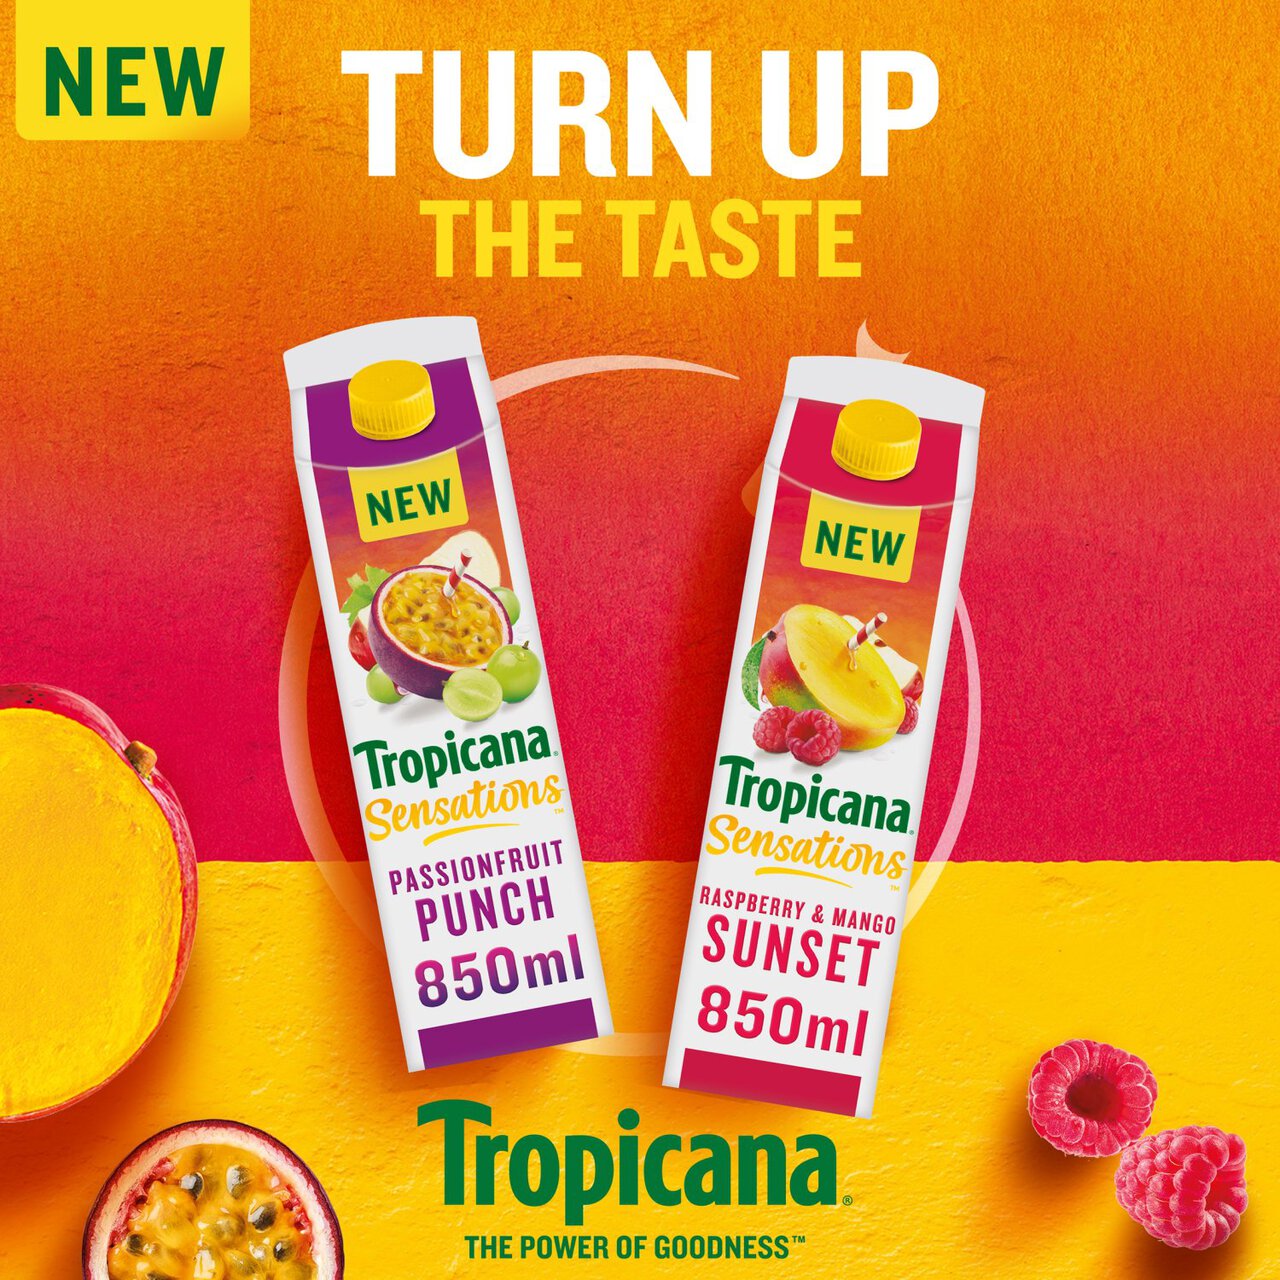 Tropicana Sensations Raspberry & Mango Sunset 850ml